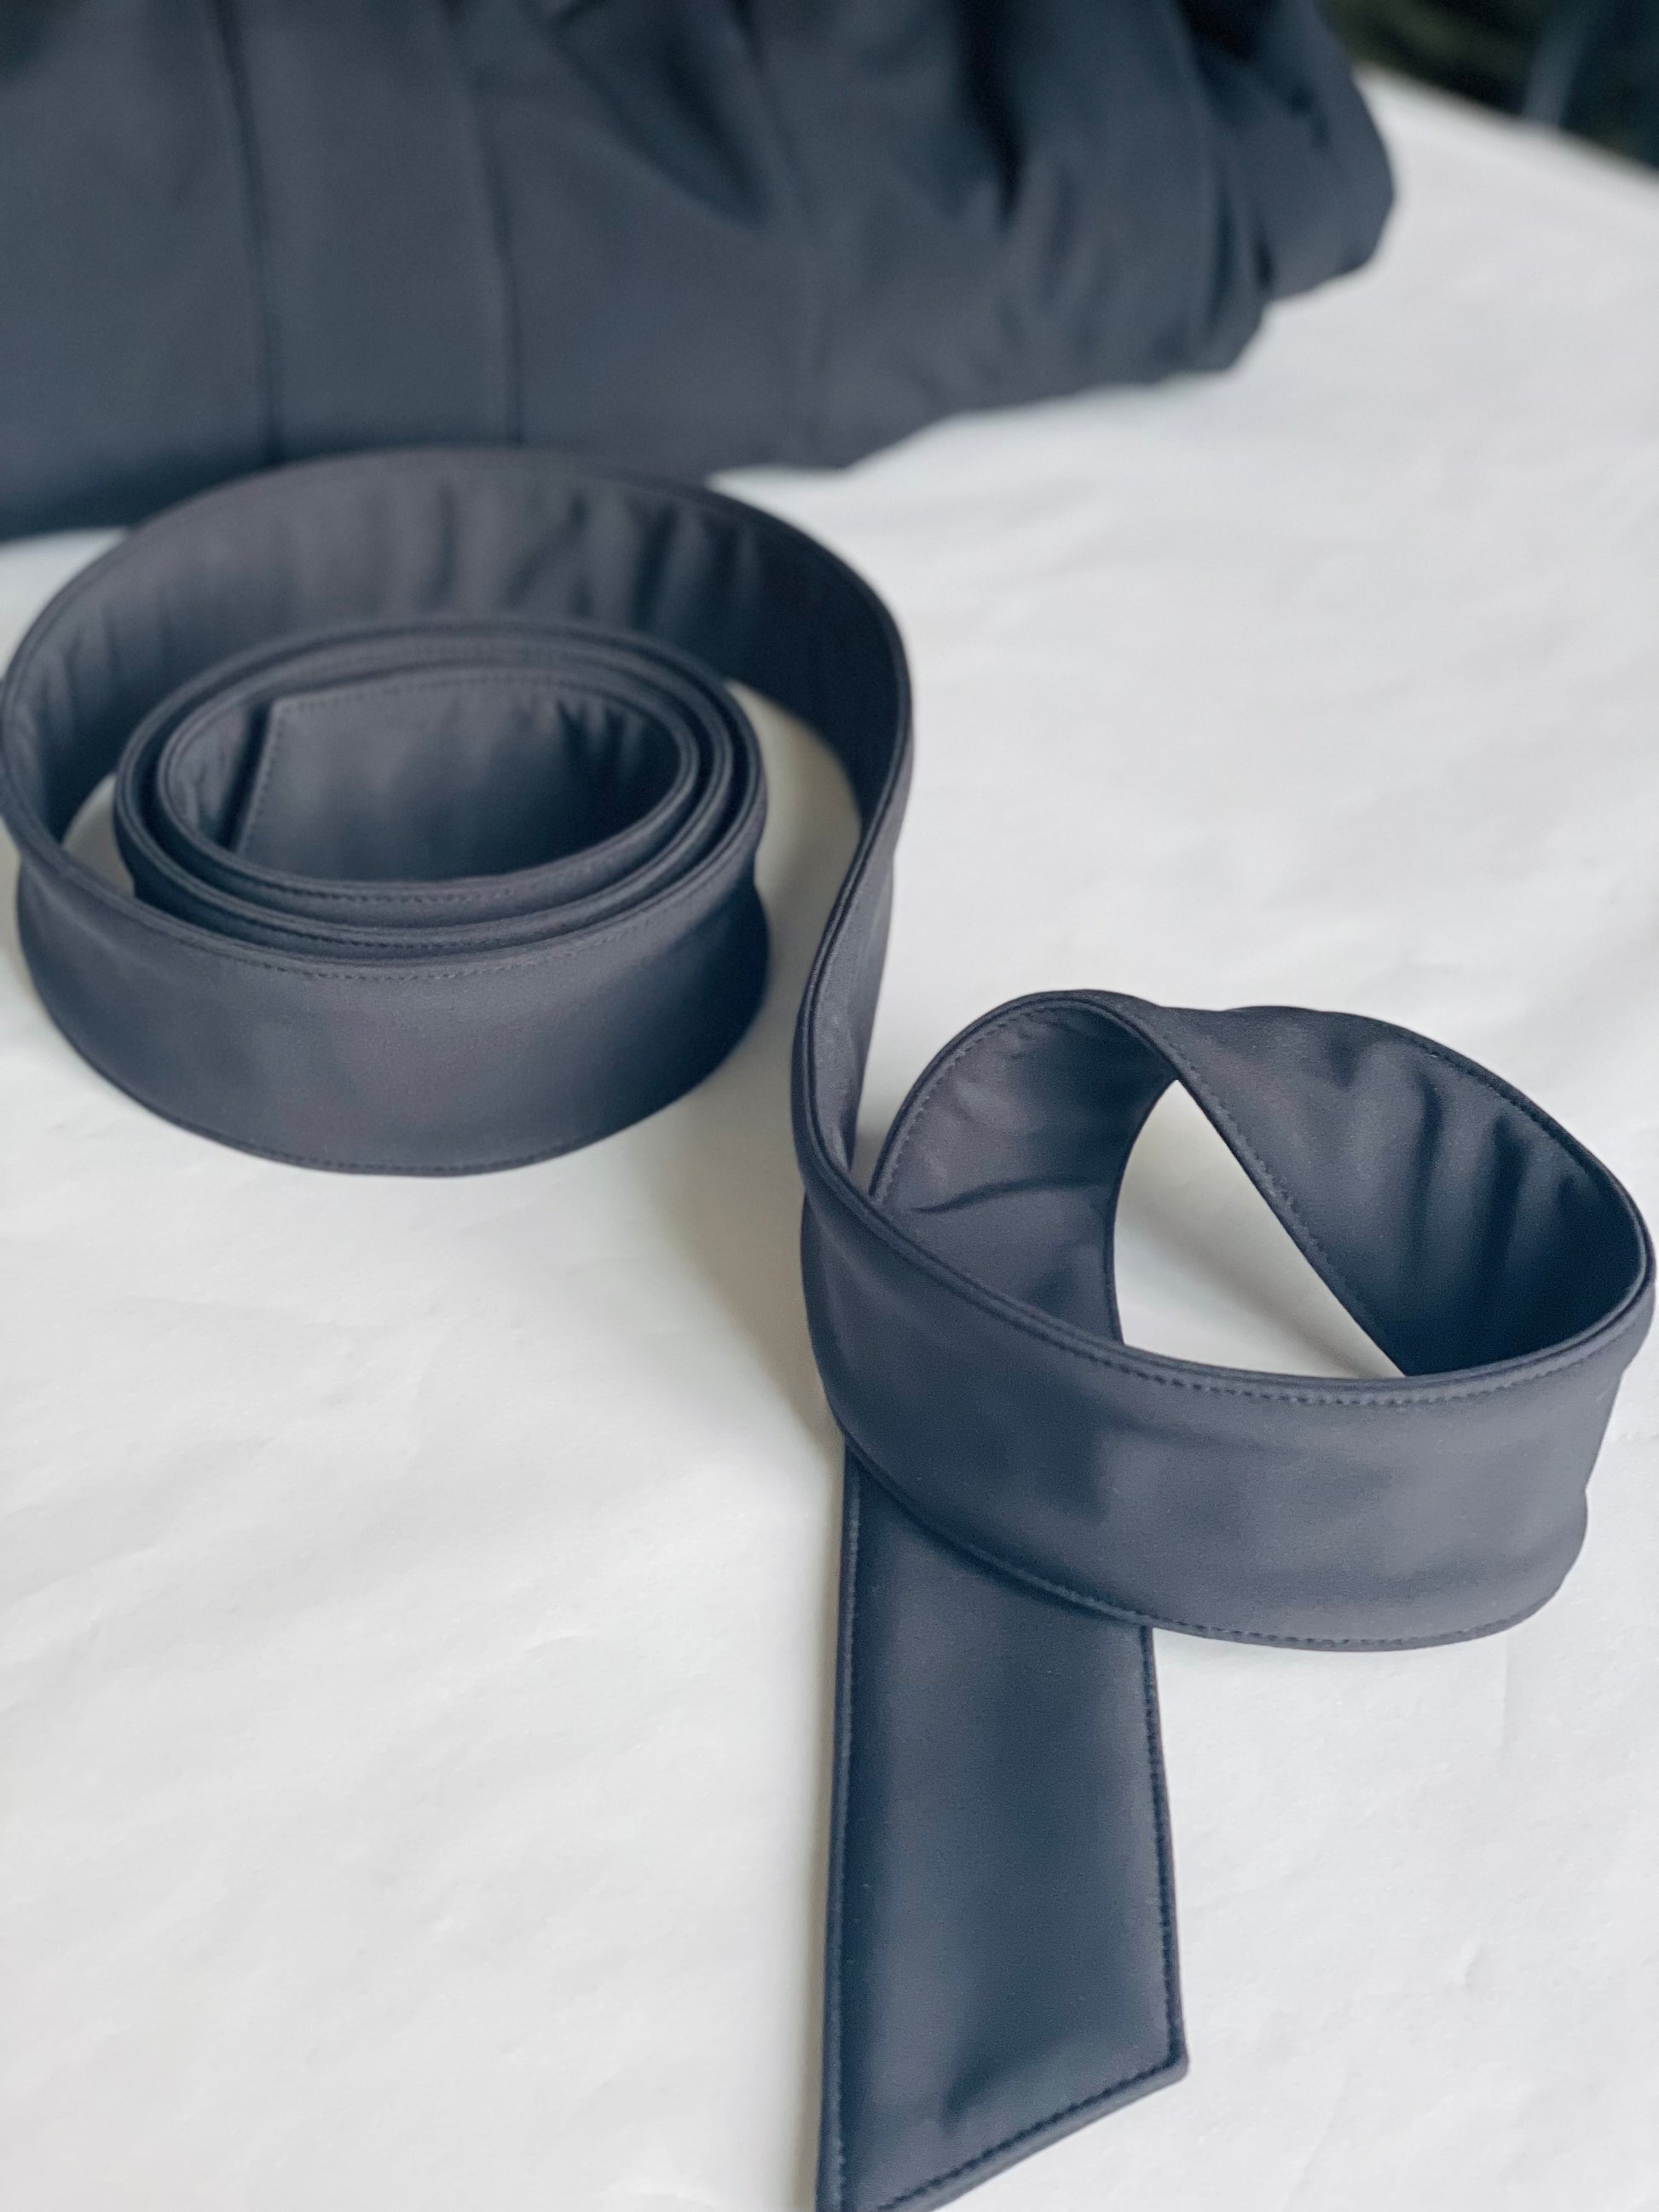 Solid black matching belt